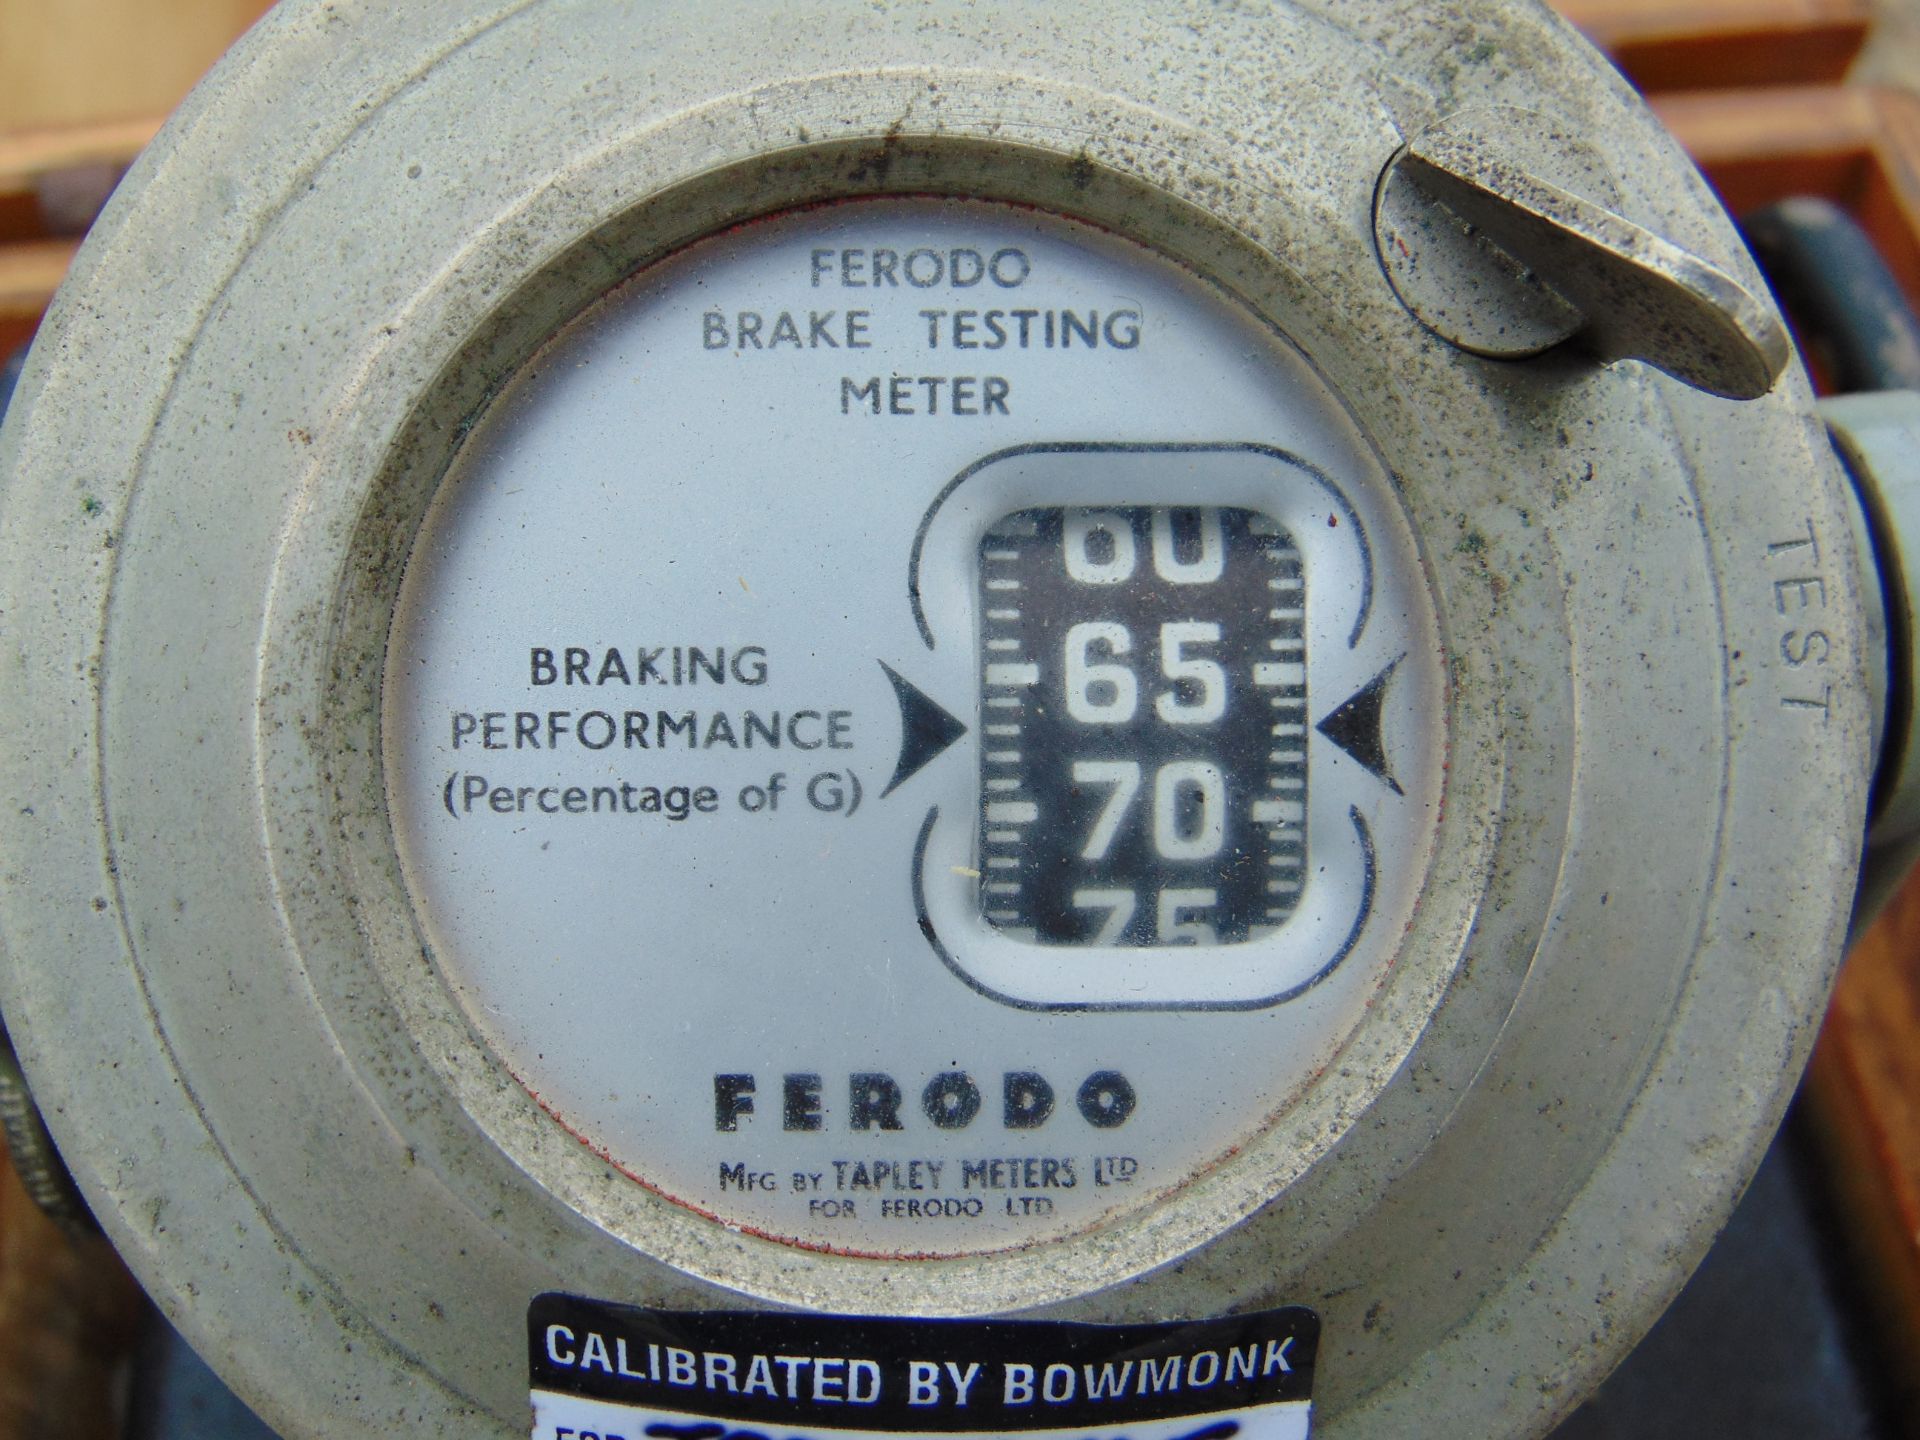 Ferodo Brake Tester - Image 2 of 3